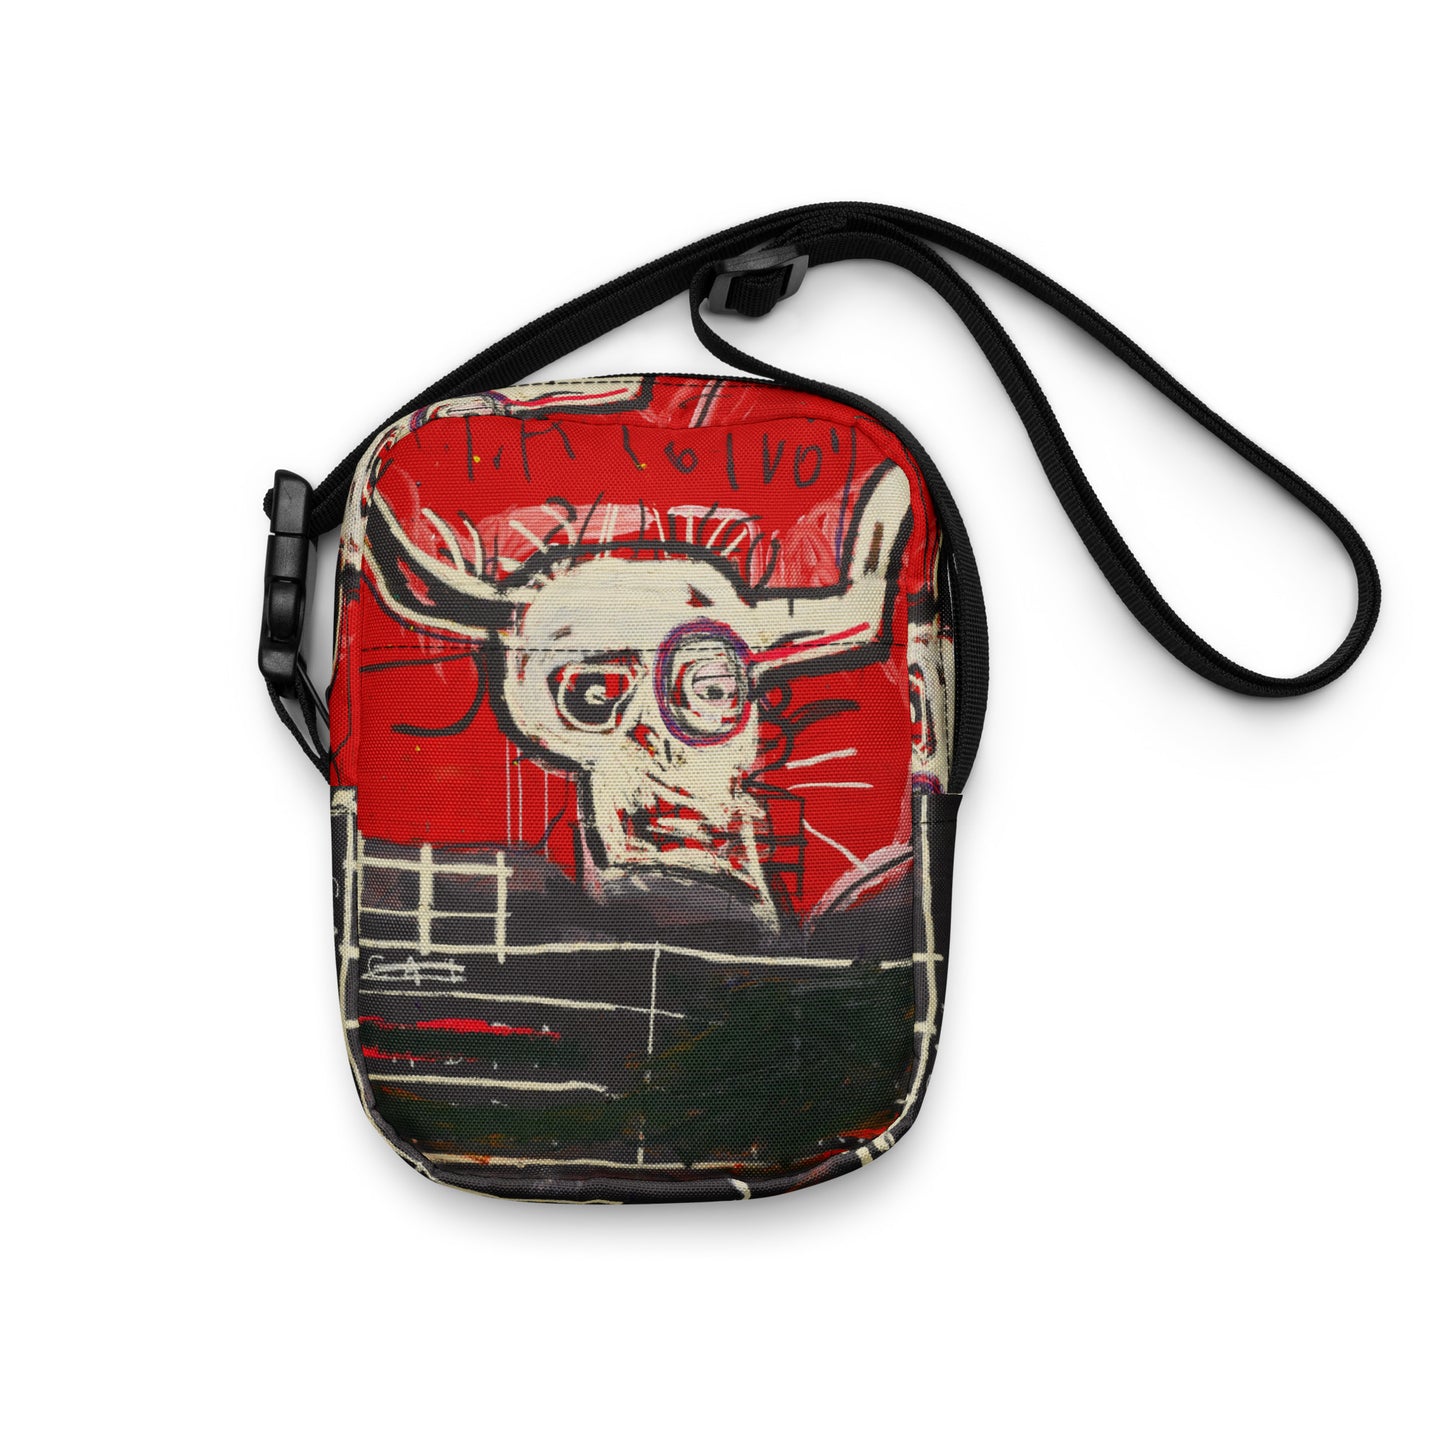 Jean-Michel Basquiat "Cabra" Artwork Bag